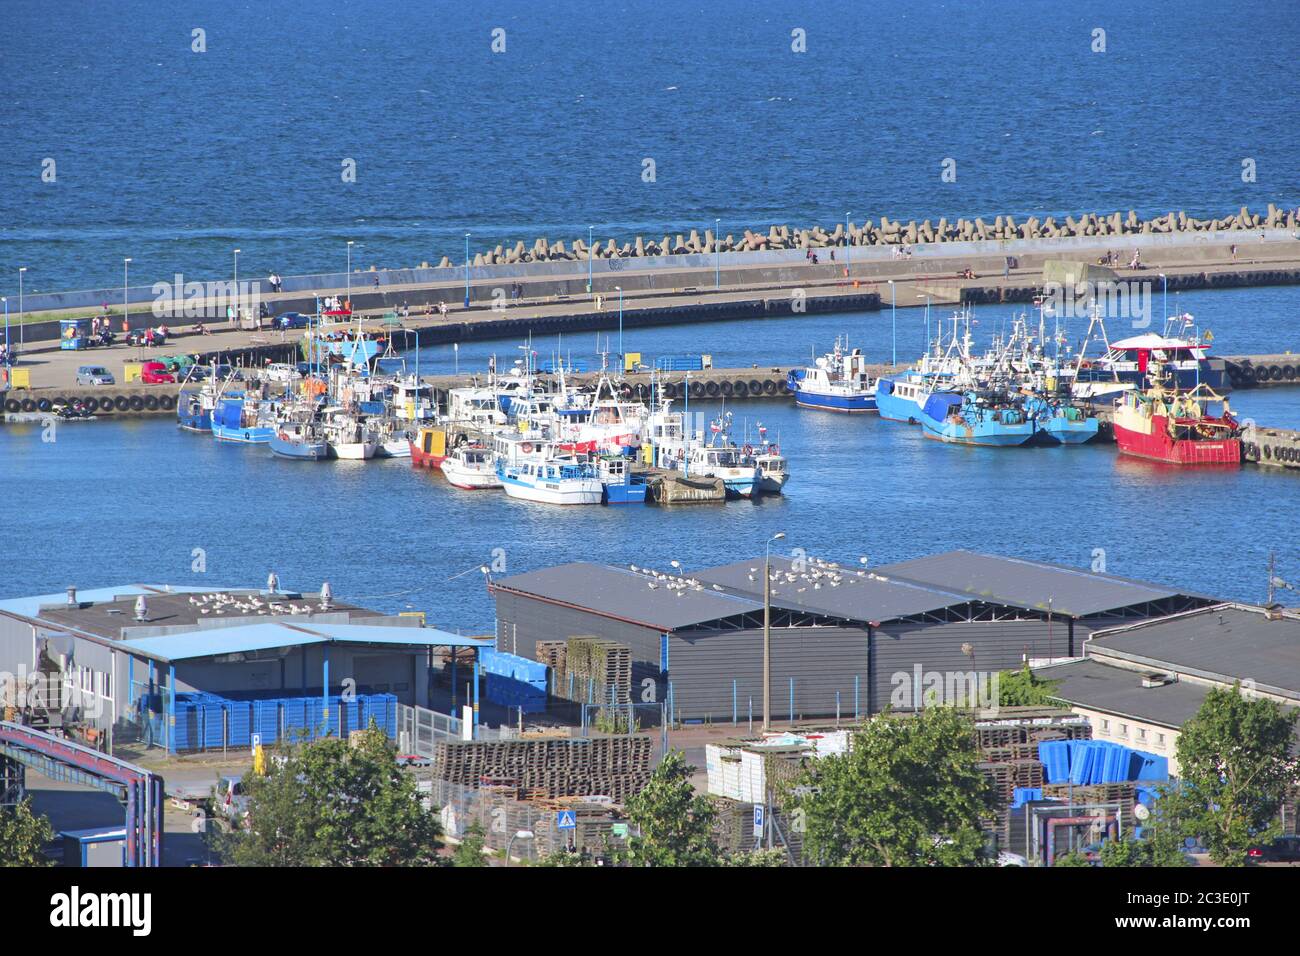 city harbor with many moored boats and ships. Ships and boats in port. Many boats are moored on pier Stock Photo